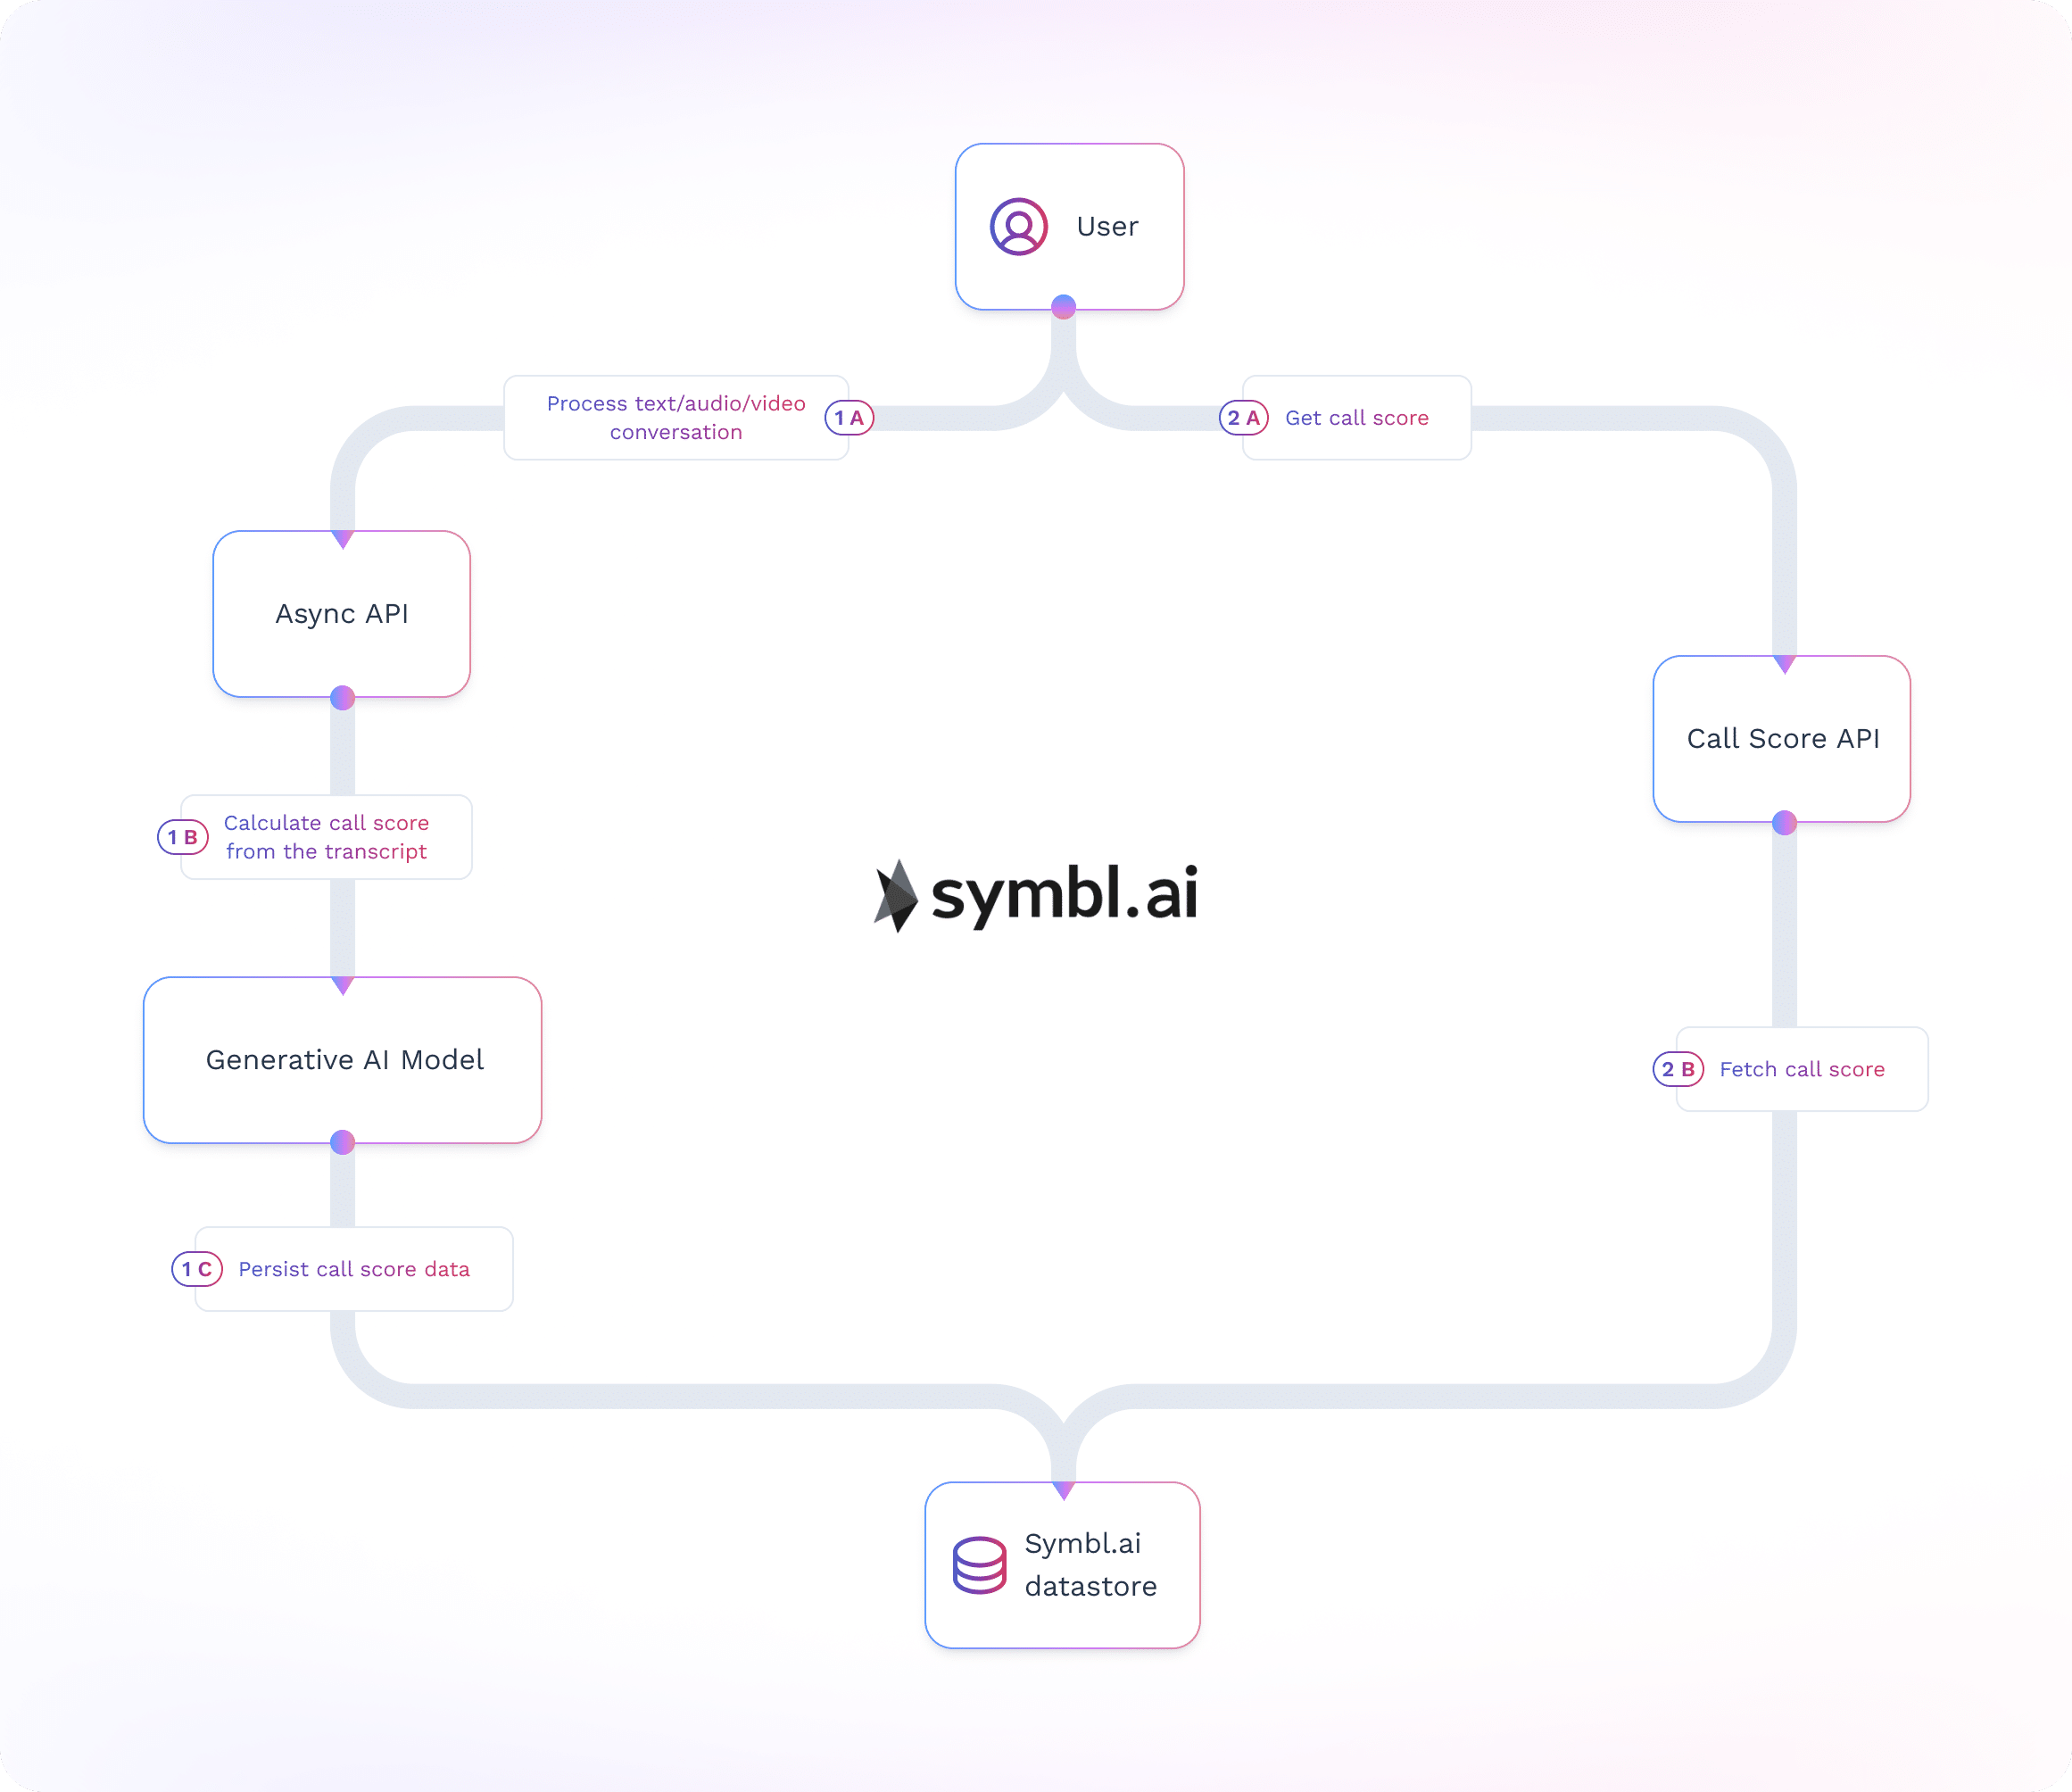 Symbl.ai Call Score API Diagram